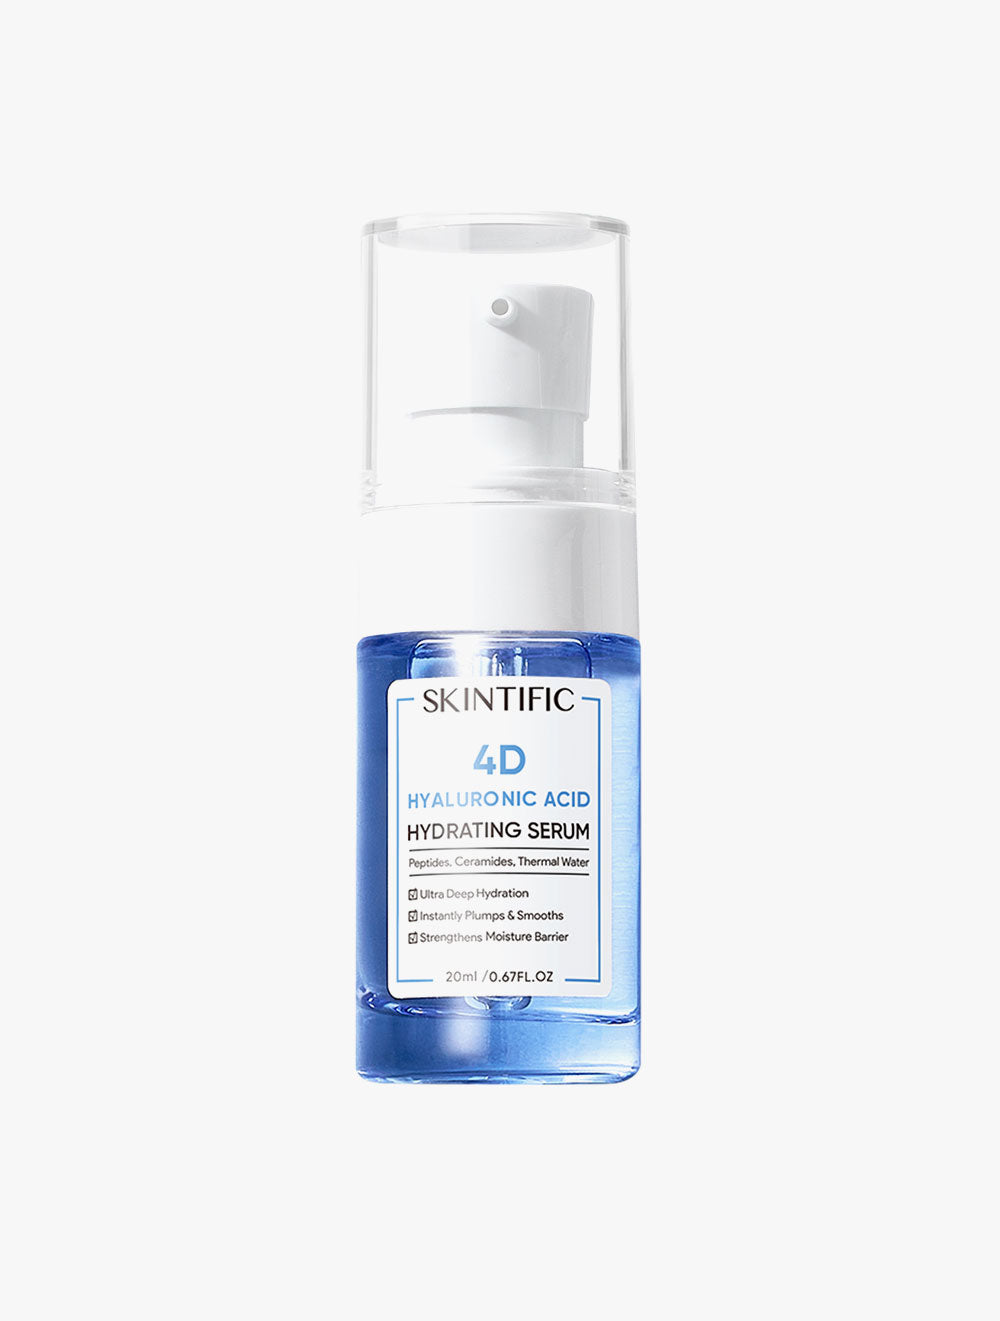 SKINTIFIC 4D Hyaluronic Acid Hydrating Serum-20ml